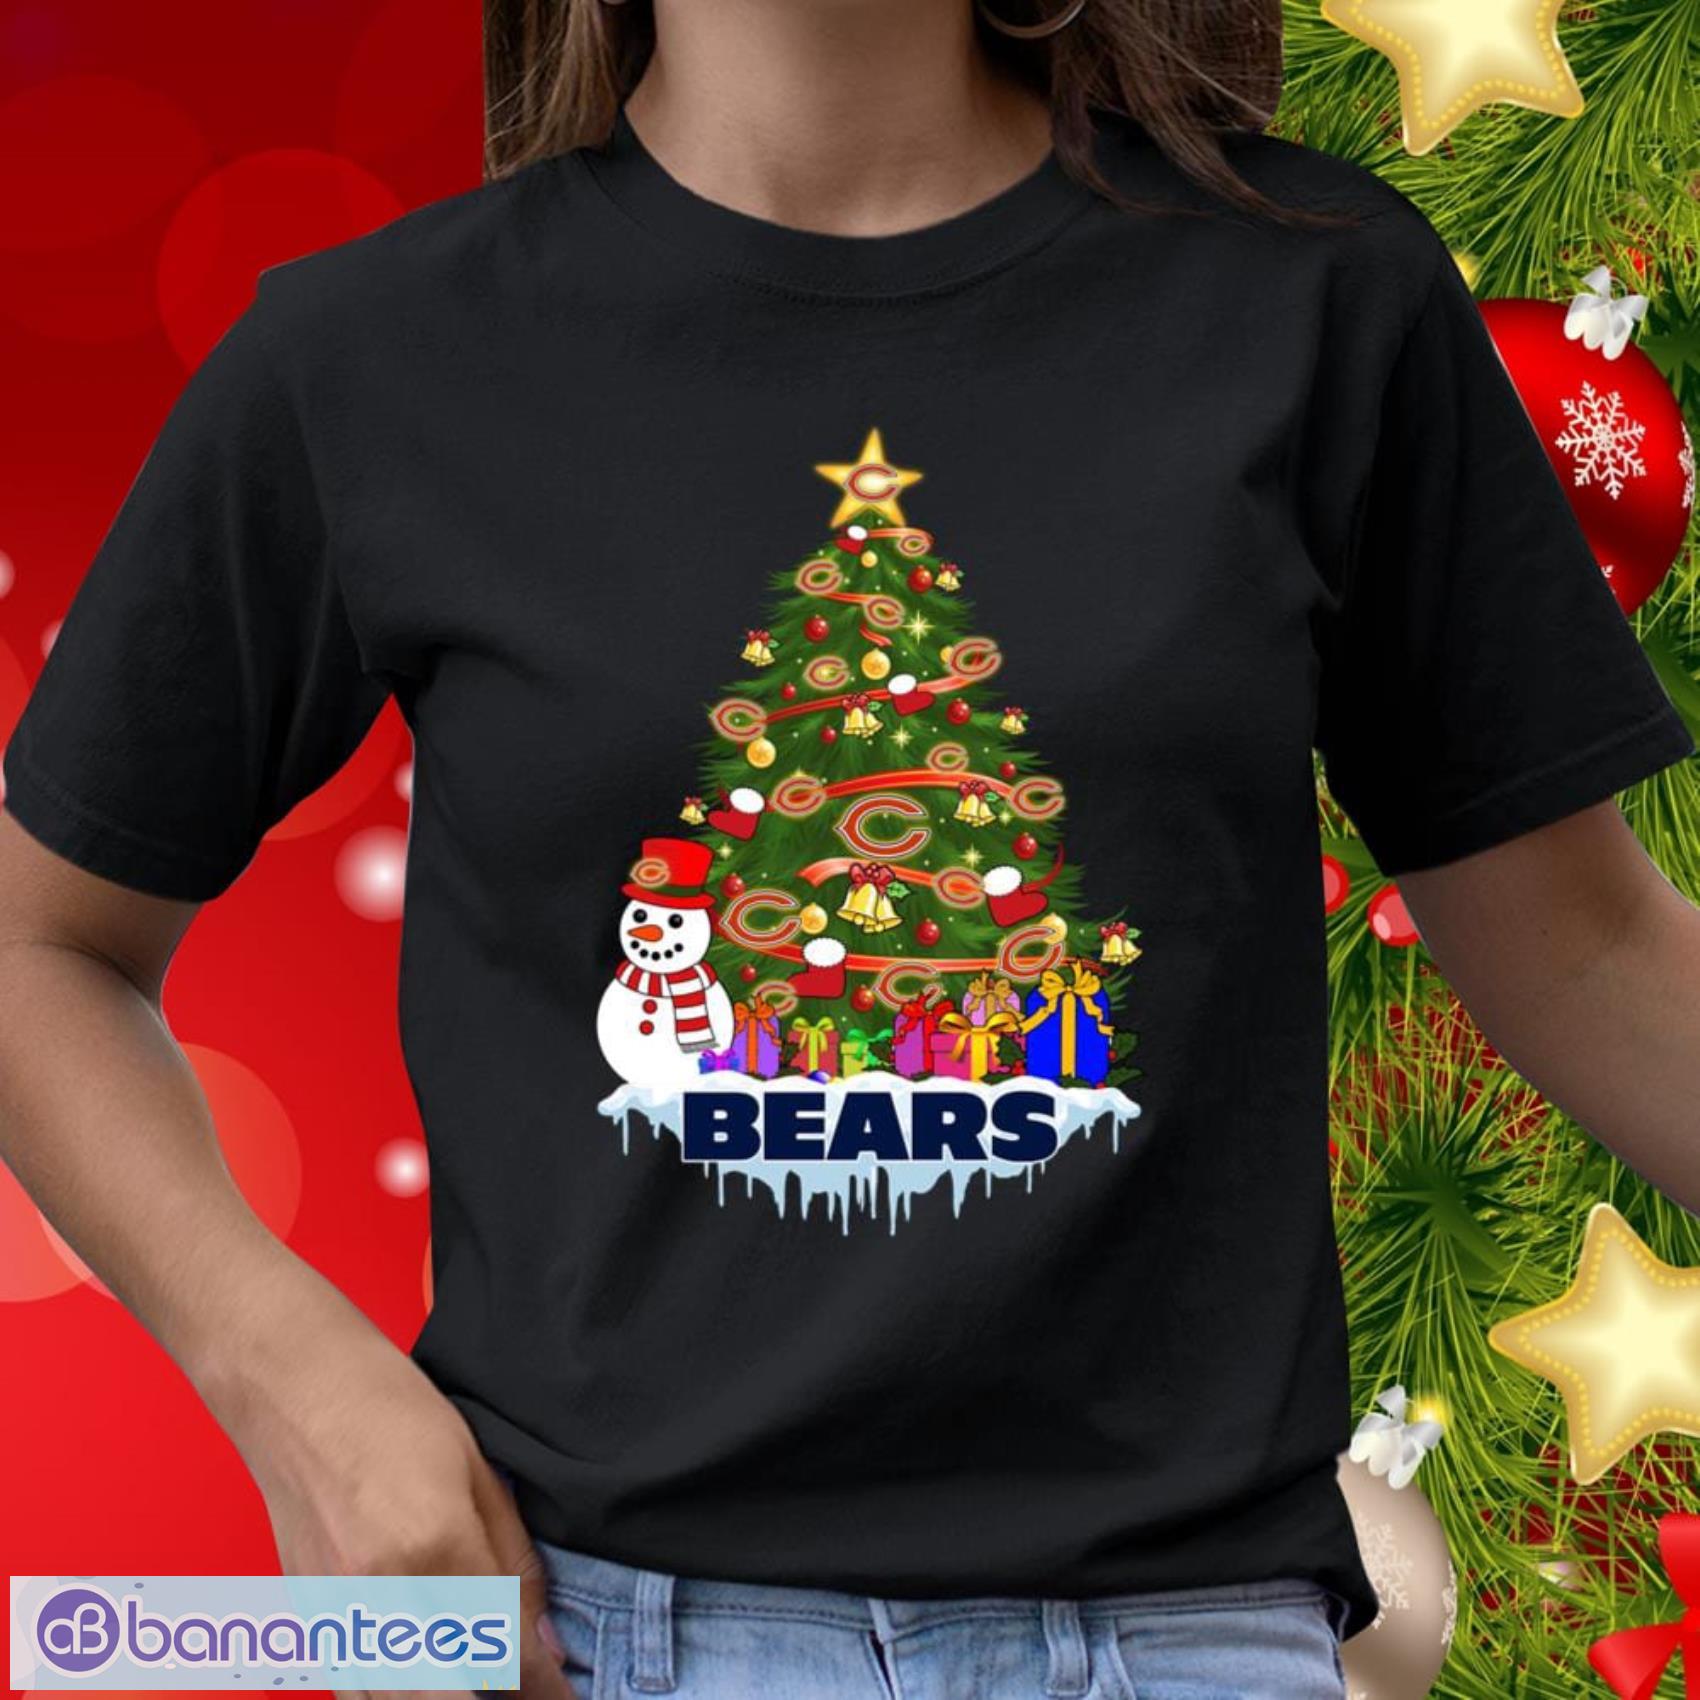 Chicago Bears Merry Christmas NFL Football Gift Fr Fans Sports T Shirt - Chicago Bears Merry Christmas NFL Football Sports T Shirt_2